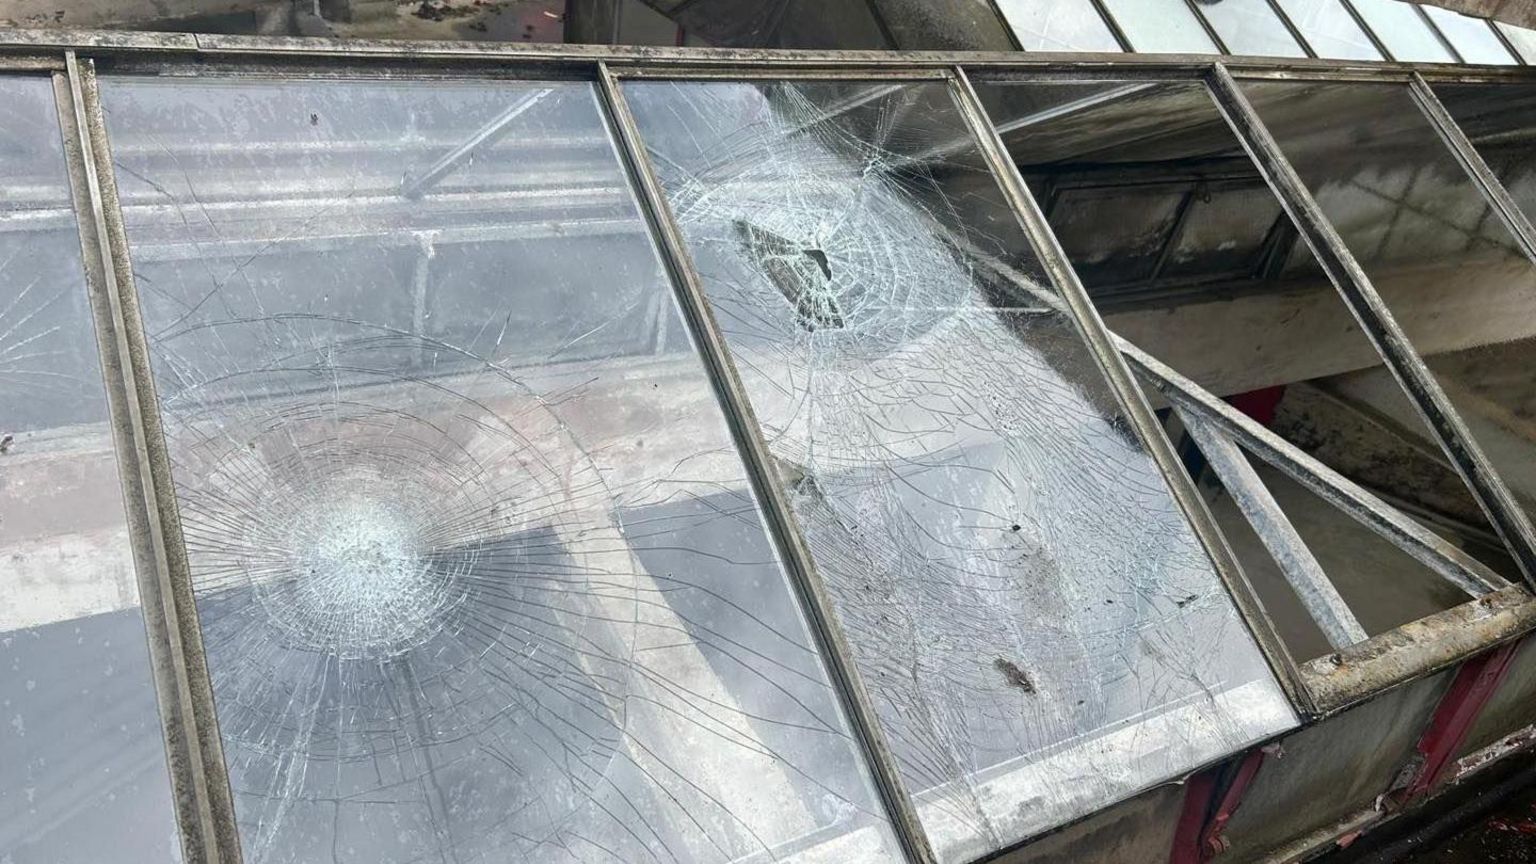 A cracked window pane